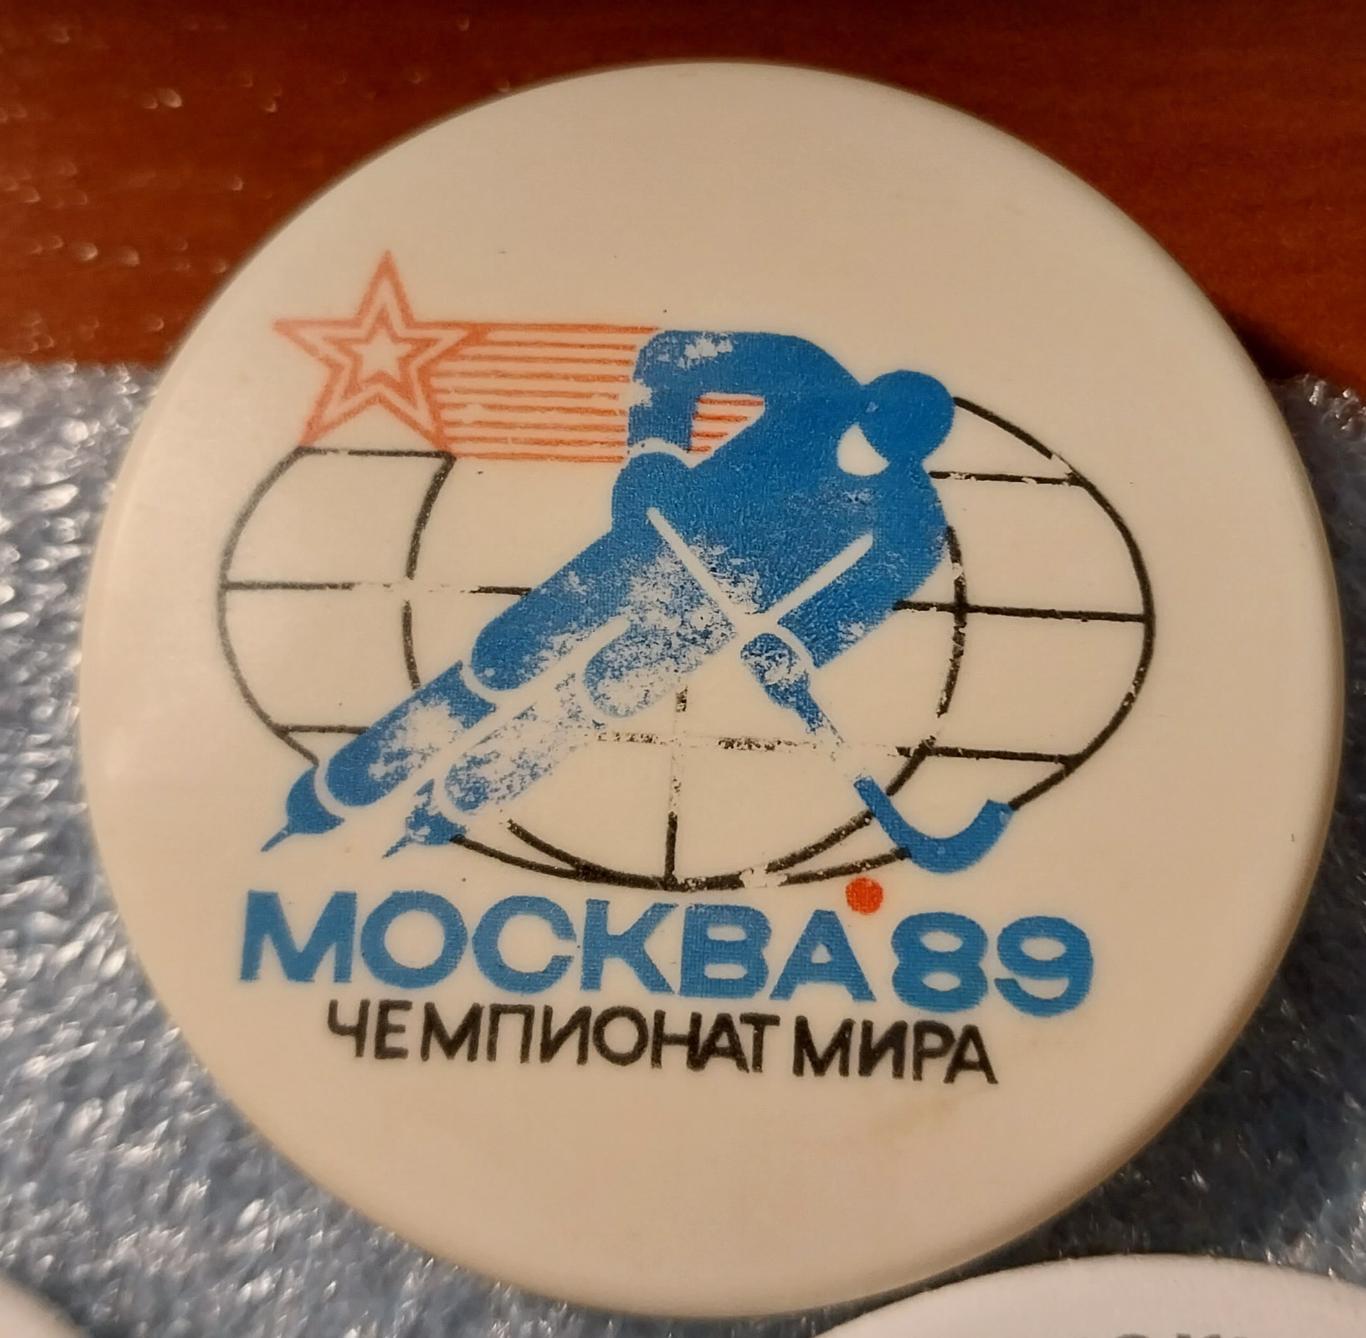 Хоккей с мячом, Чемпионат мира, Москва, 1989